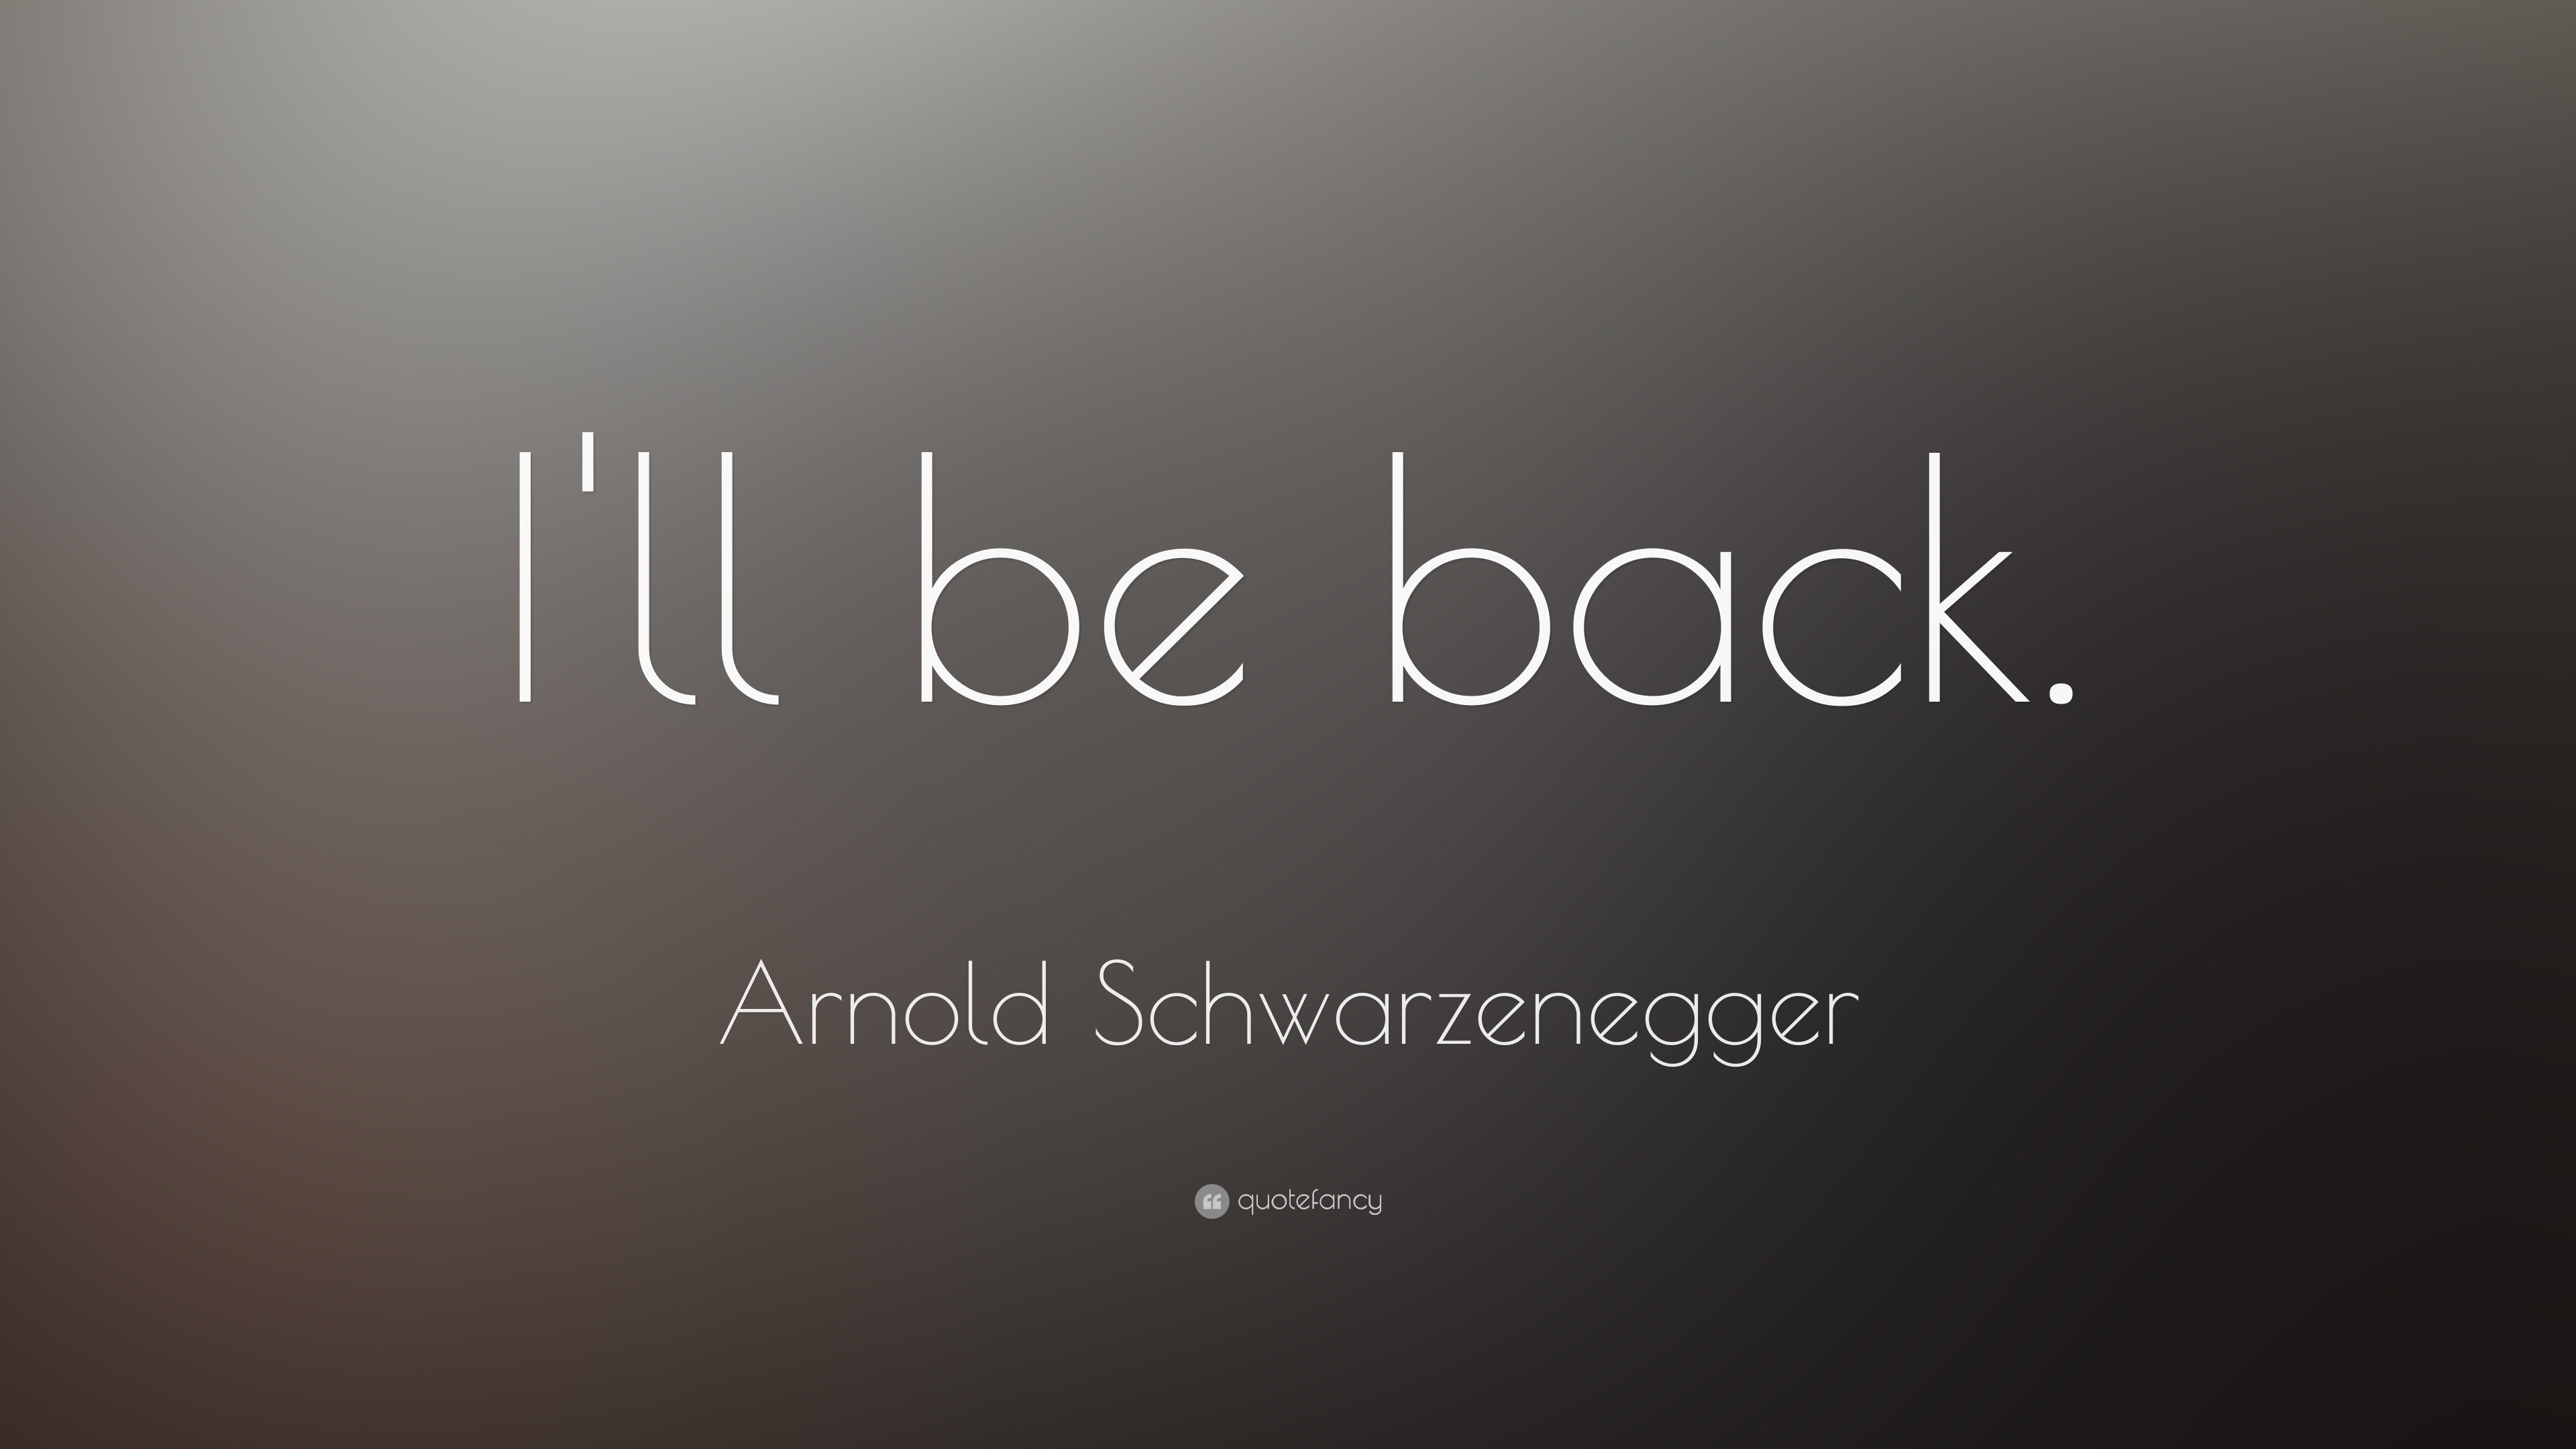 Arnold Schwarzenegger Quote: “I'll be back.”